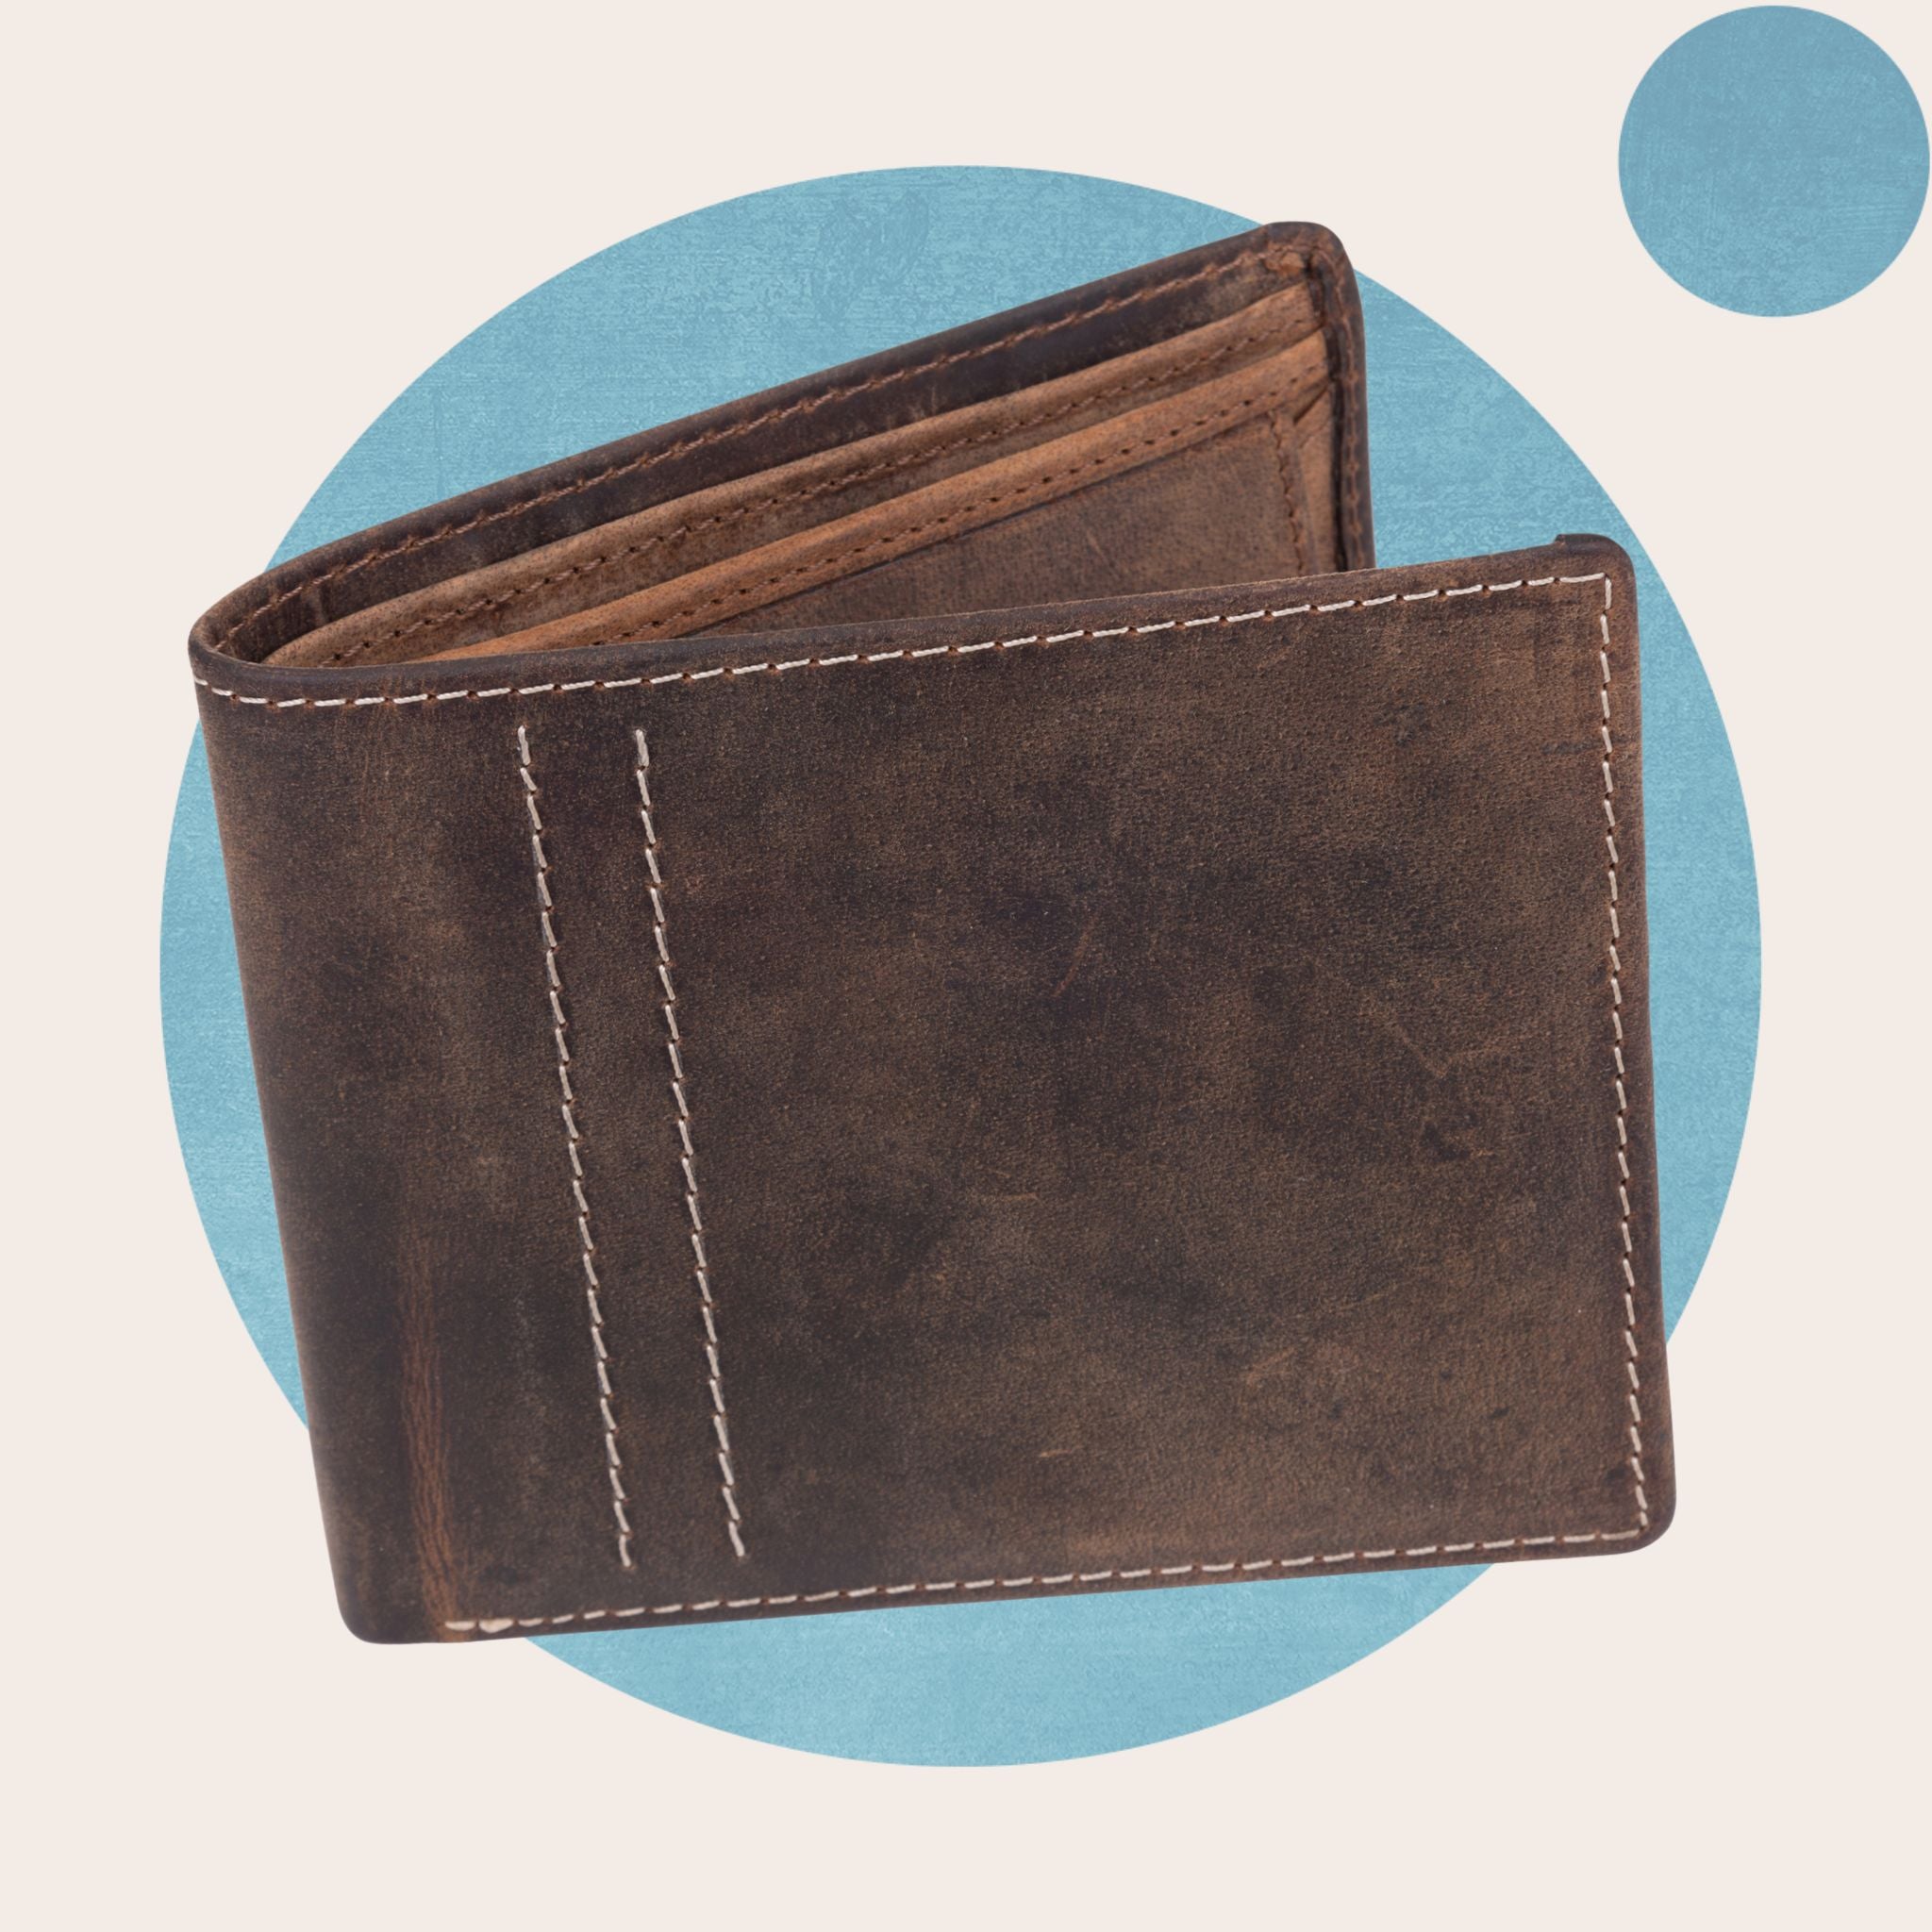 (Coffee) Super Slim Soft Wallet 100% Genuine Leather Wallet Purse Card Holders for Men